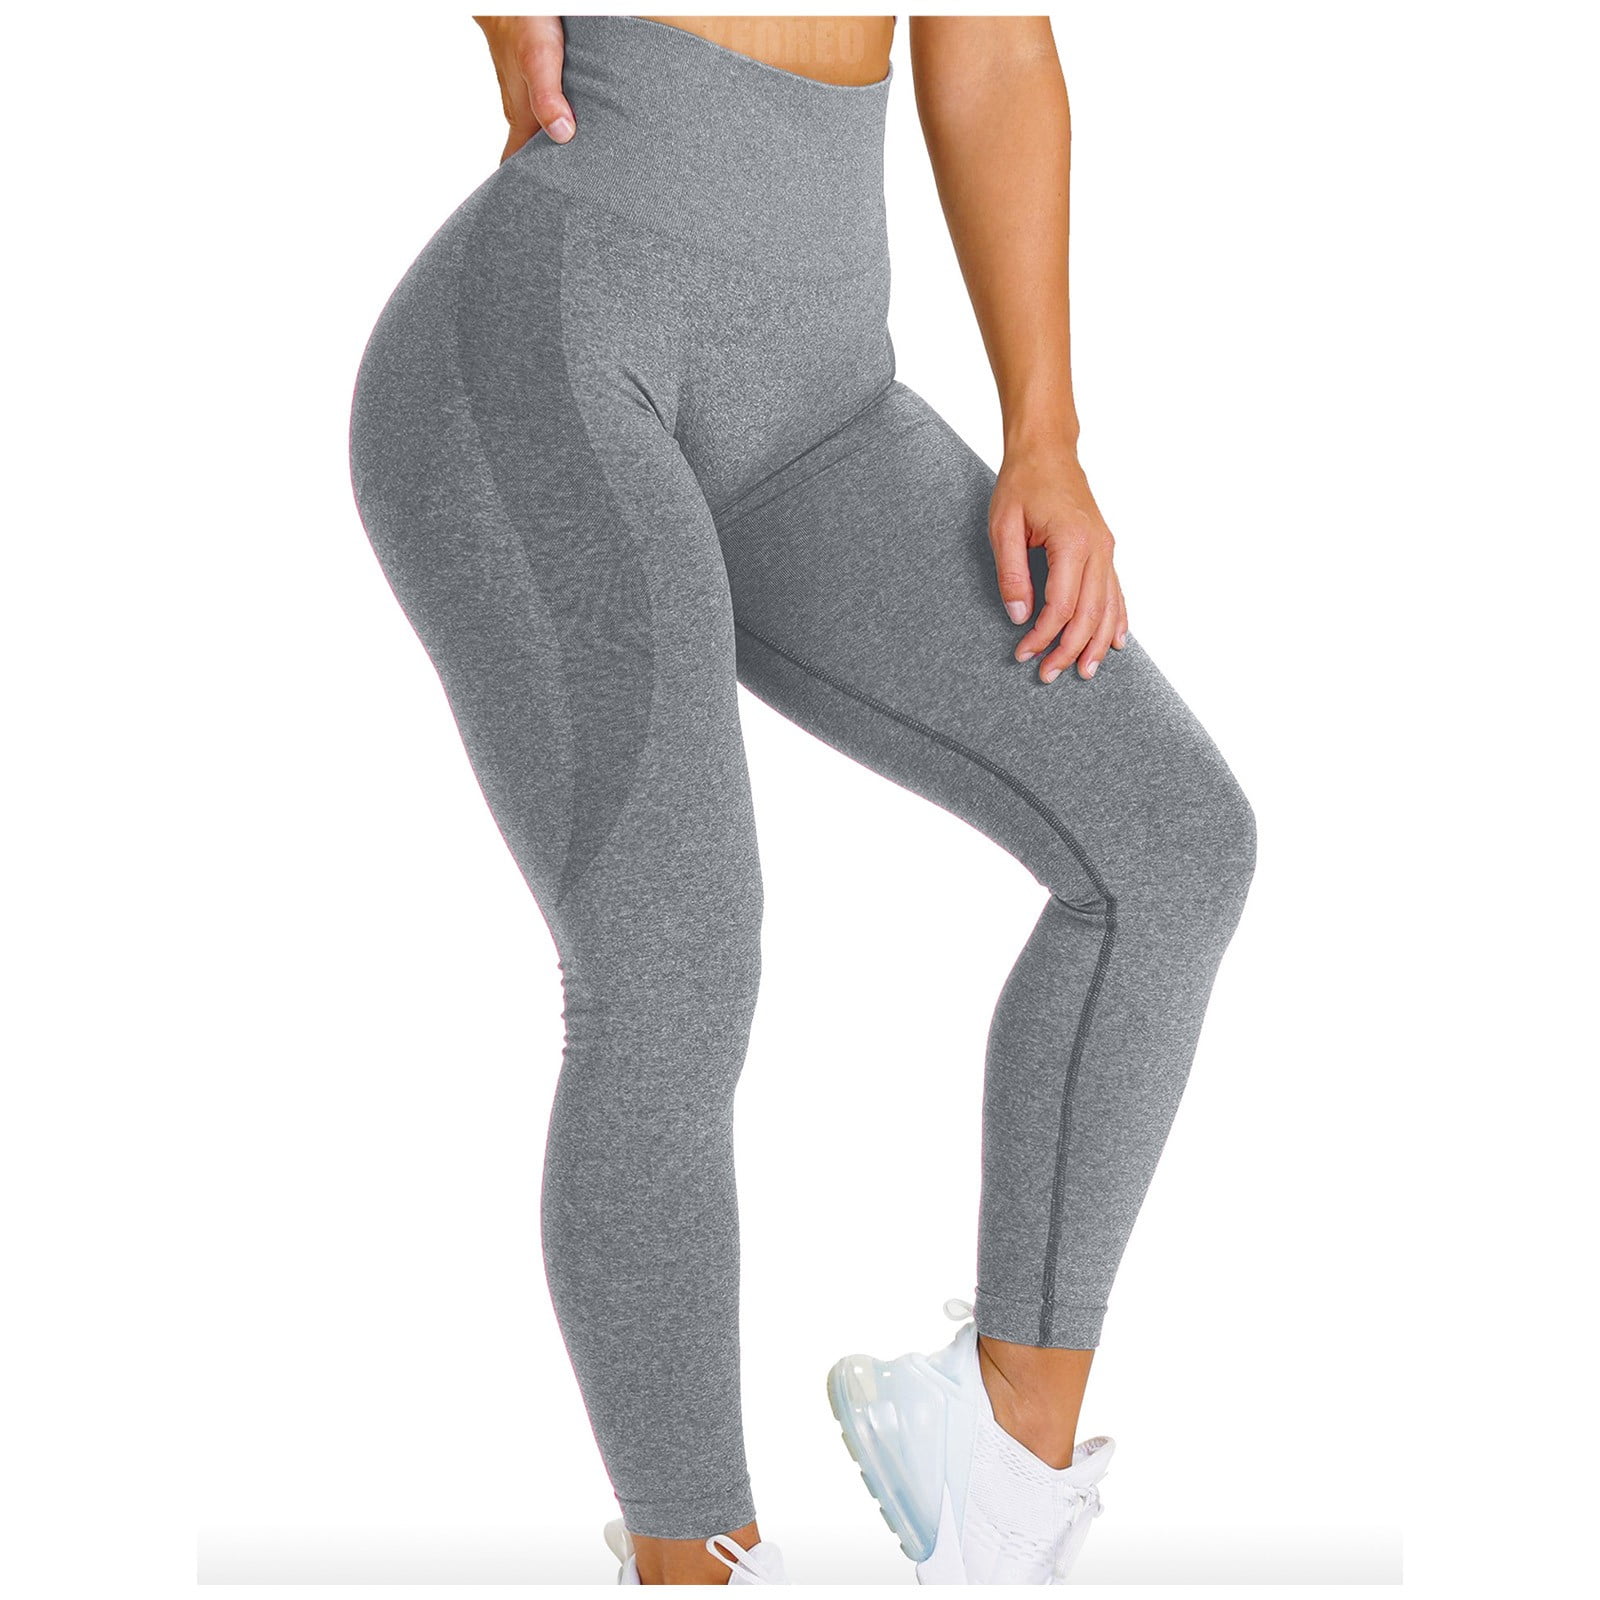 njshnmn Plus Size Leggings High Waisted Tummy Control No See Through  Workout Yoga Pants, Khaki, M 